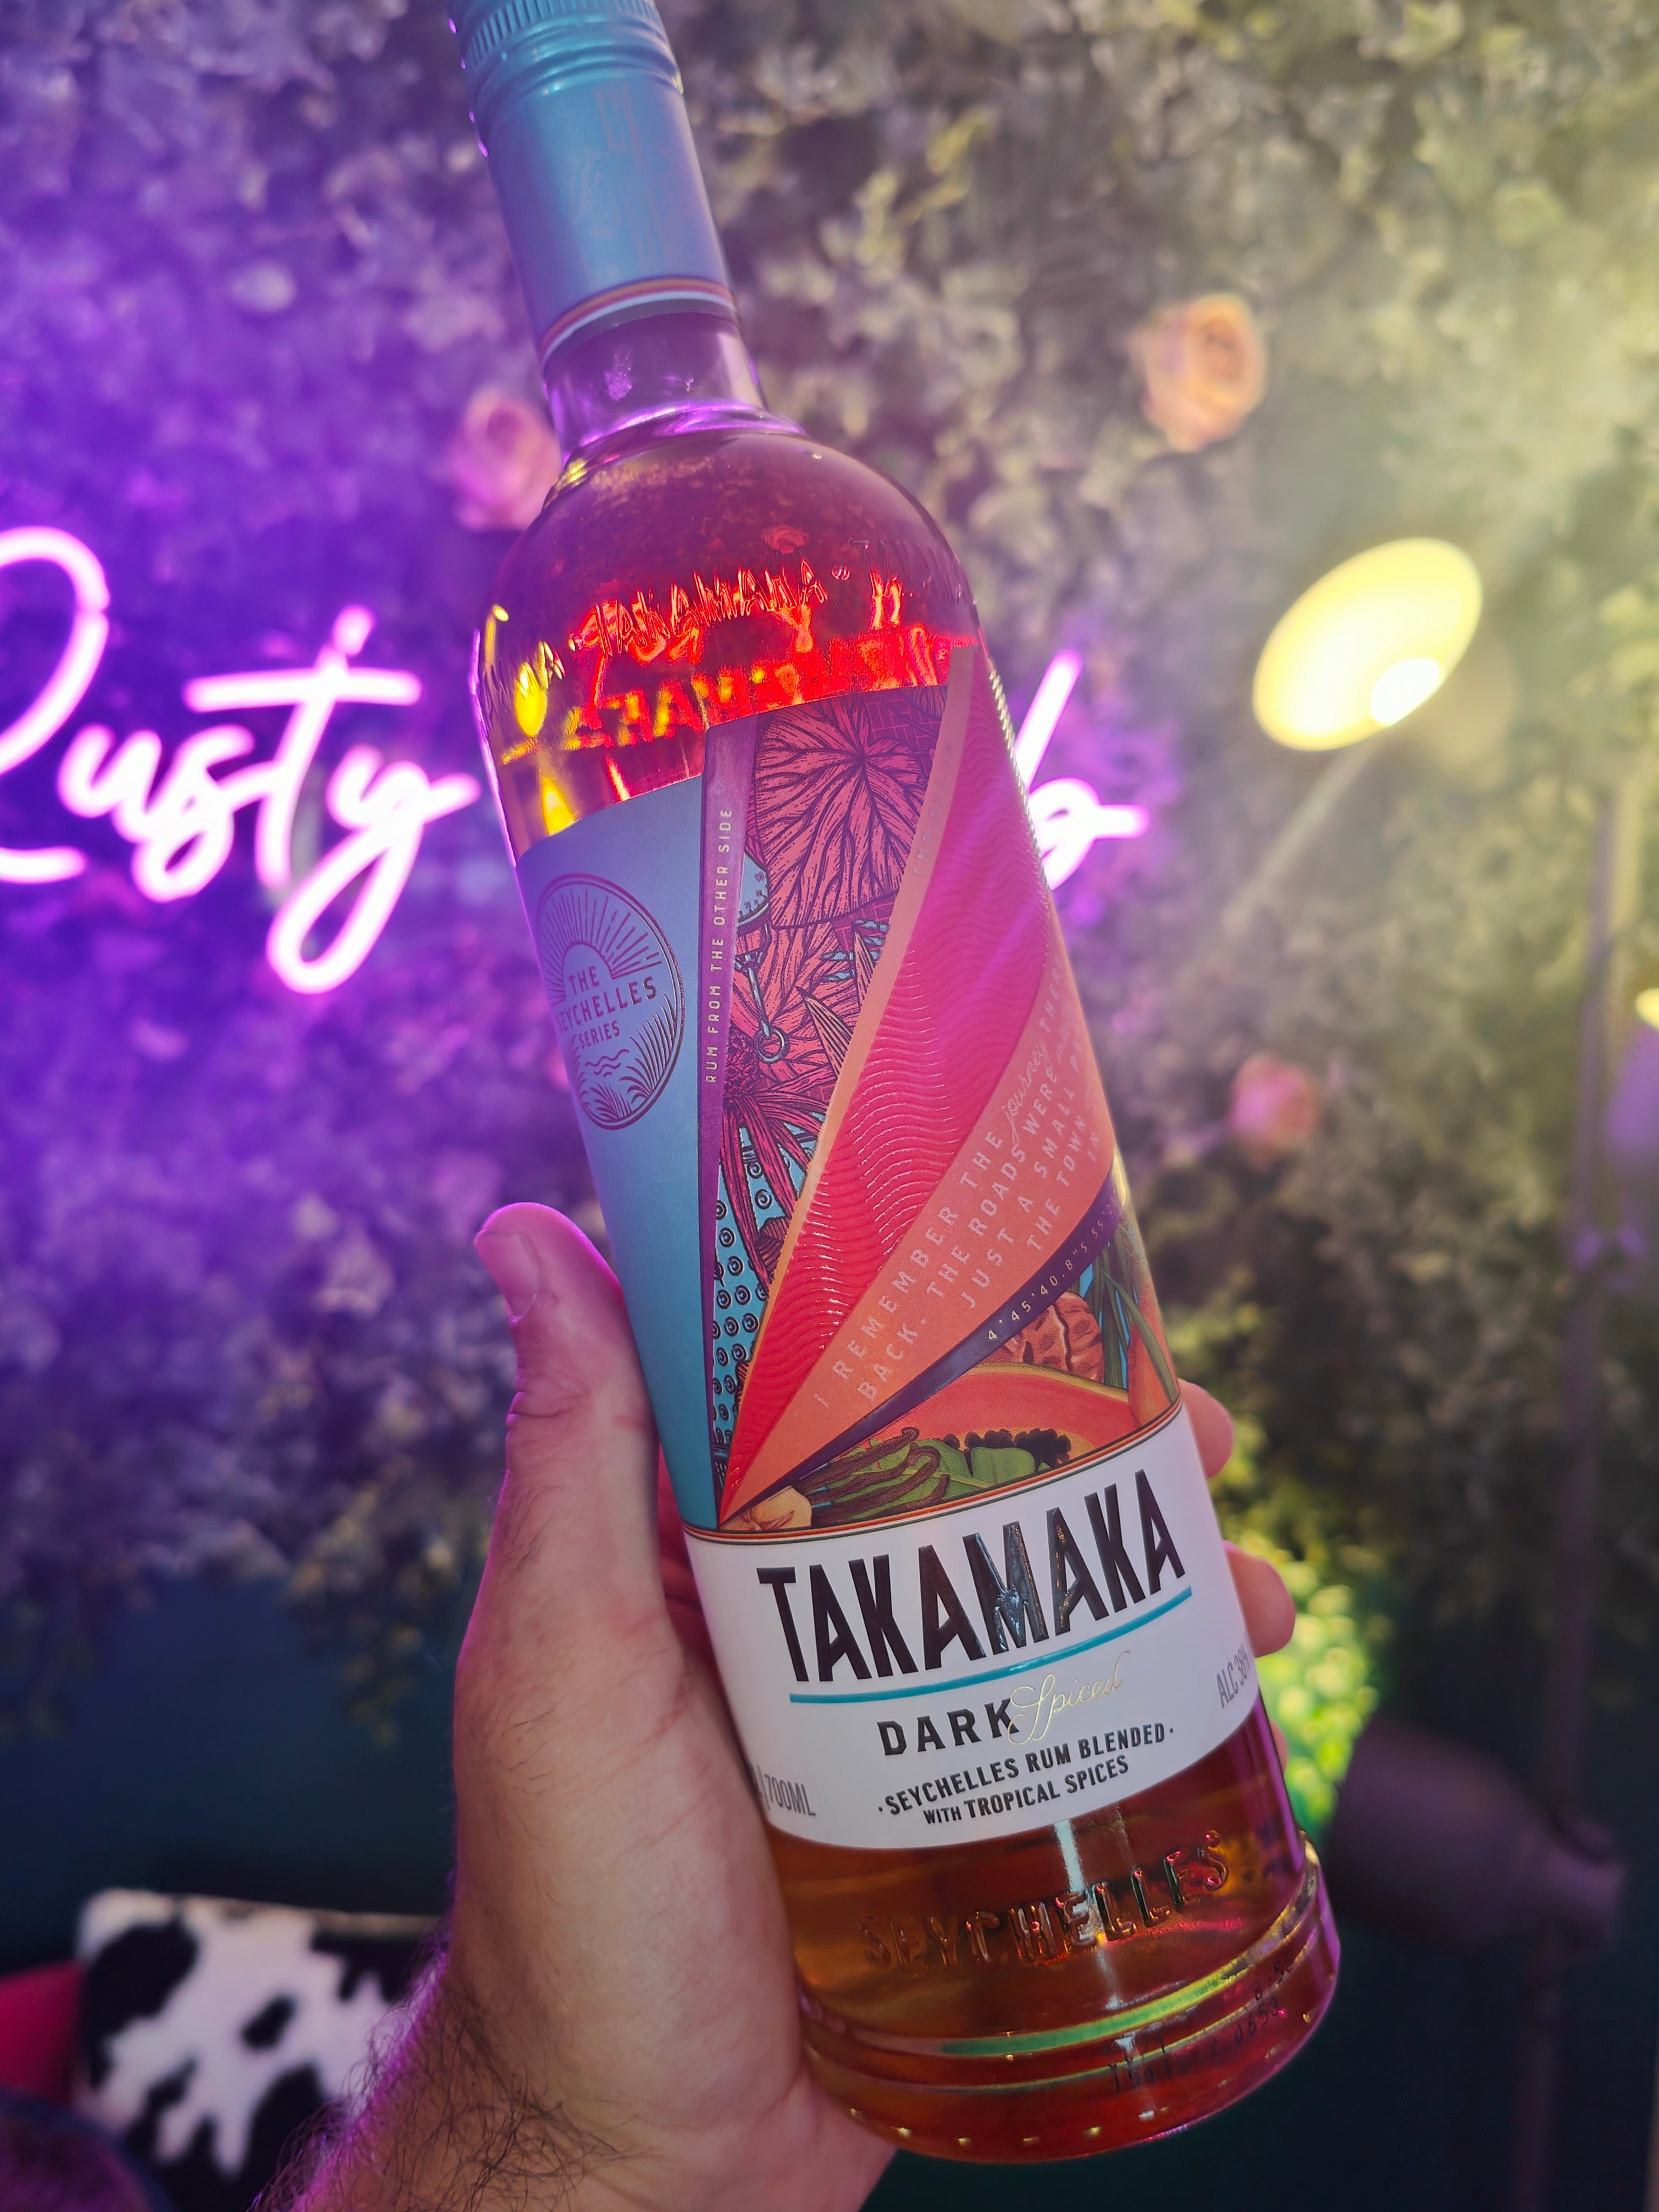 Takamaka Dark Rum Rusty spiced The Krab 38% –